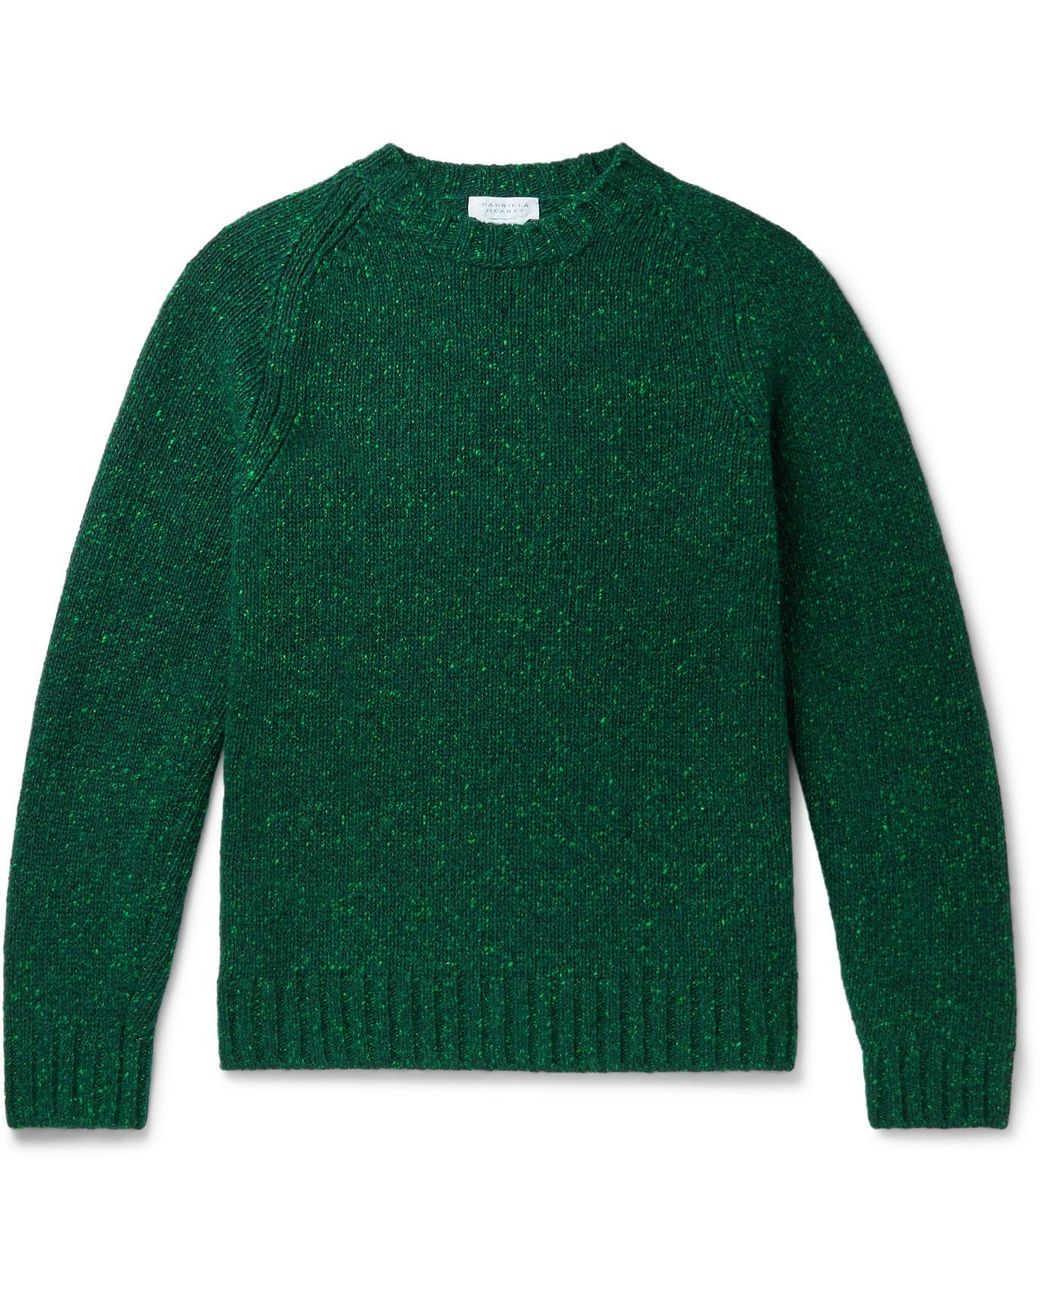 Gabriela Hearst Juan Donegal Cashmere Sweater in Green for Men - Lyst